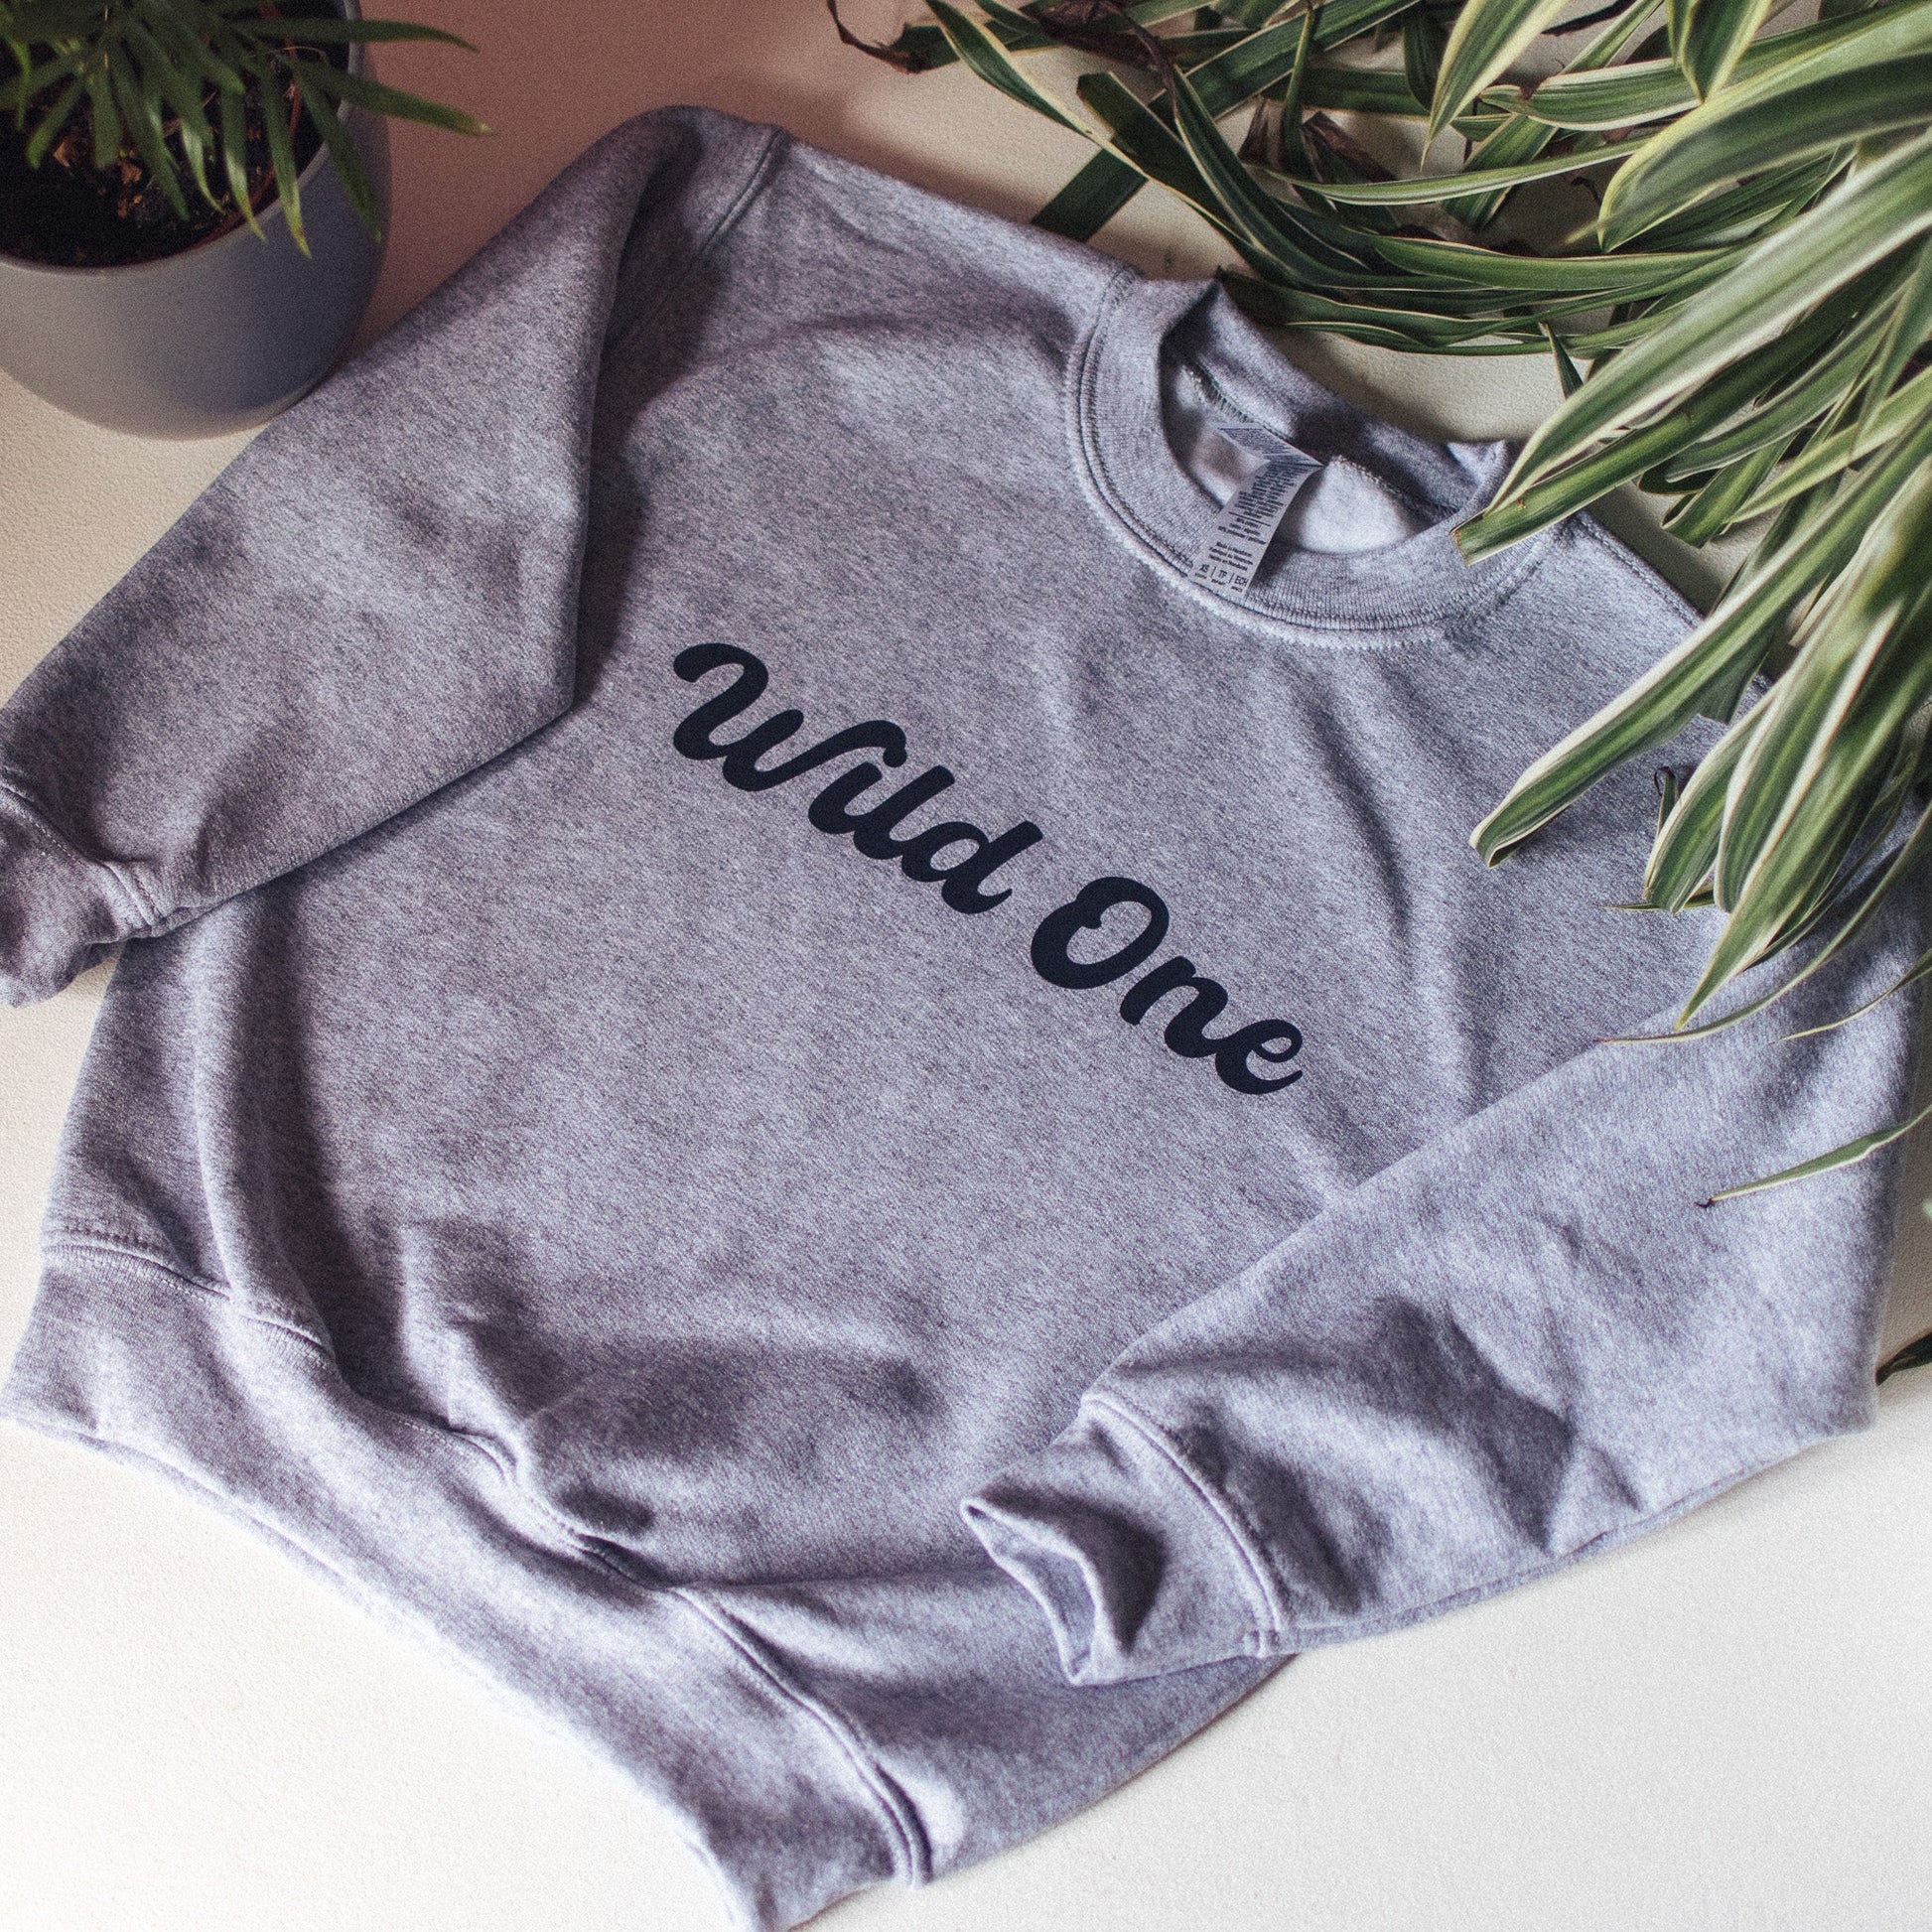 Wild One Kids Sweatshirt - F&B Crafts - Fox & Co Apparel